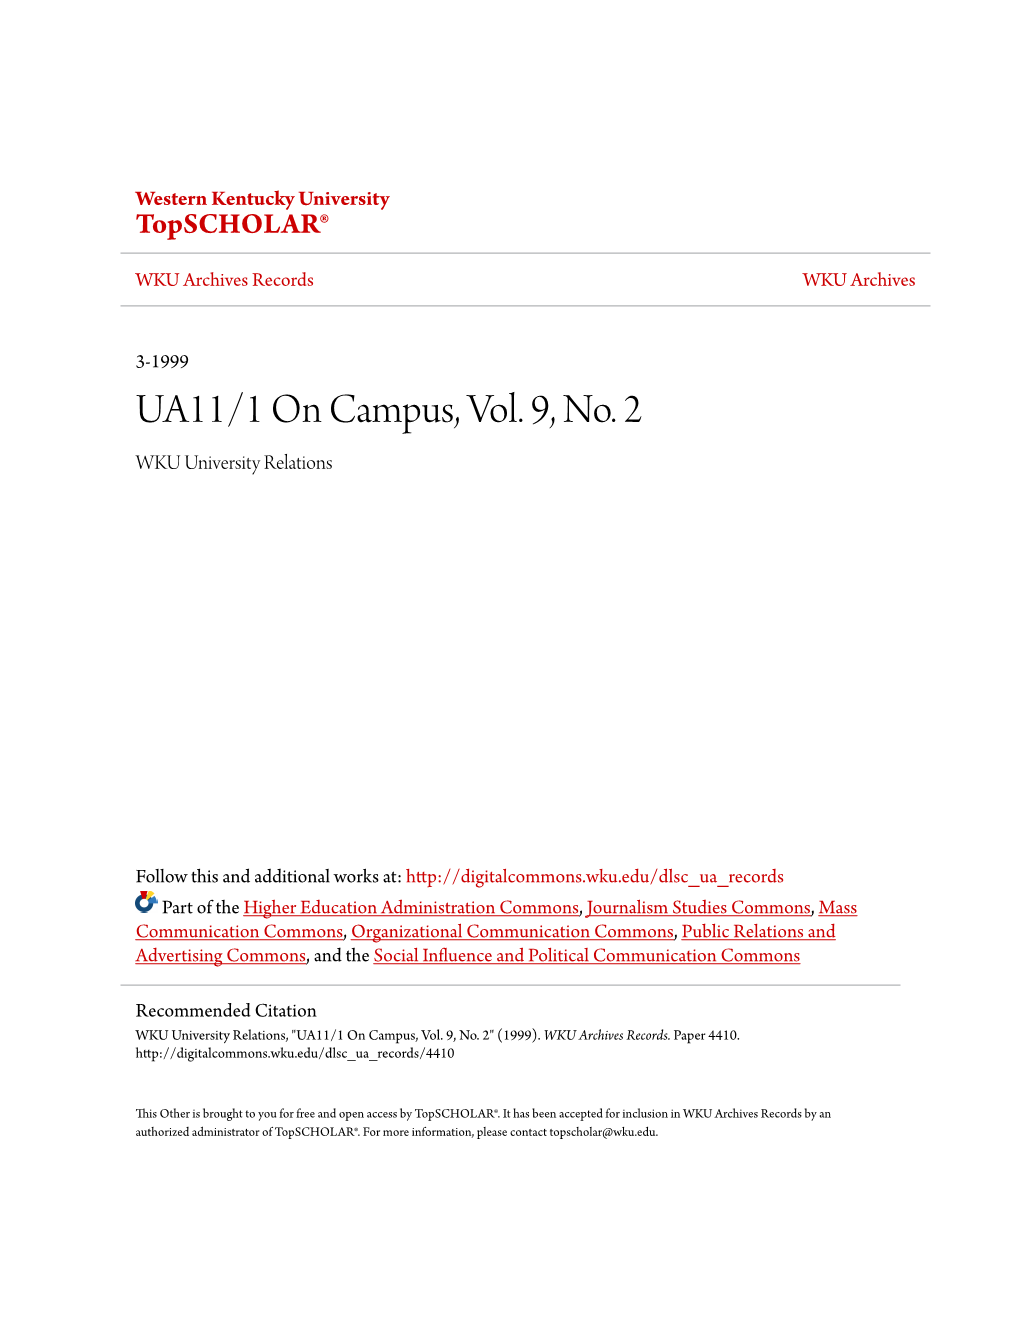 UA11/1 on Campus, Vol. 9, No. 2 WKU University Relations